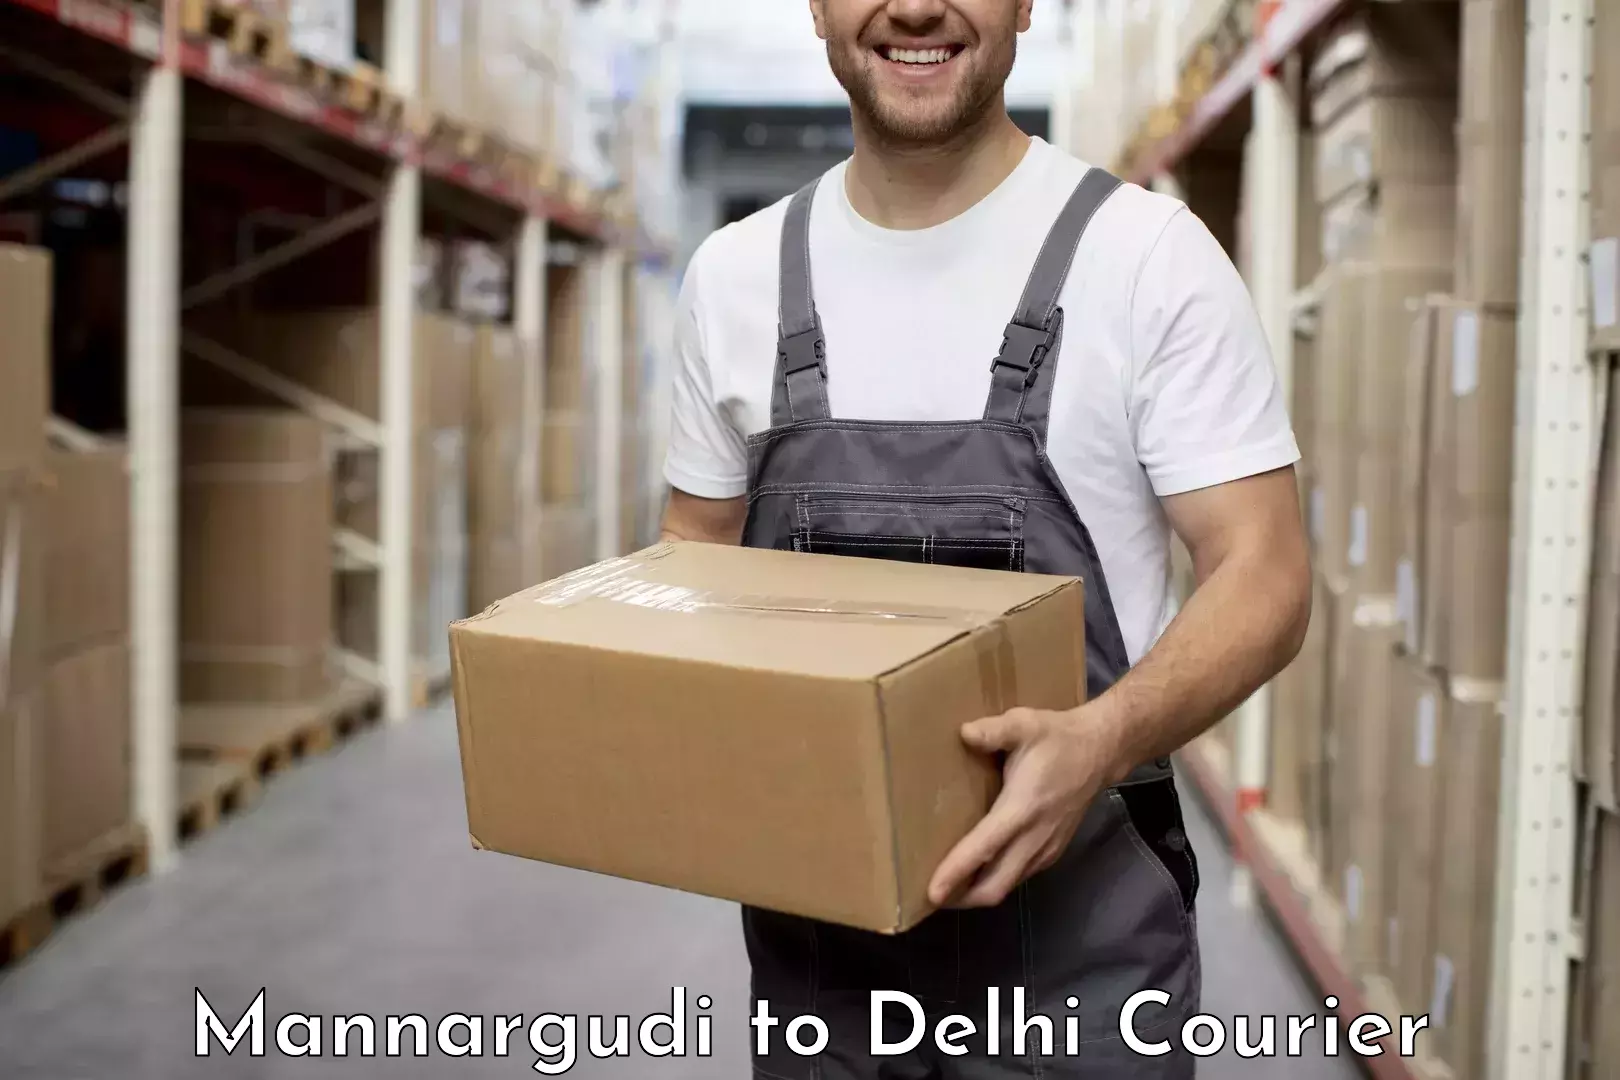 International parcel service Mannargudi to Delhi